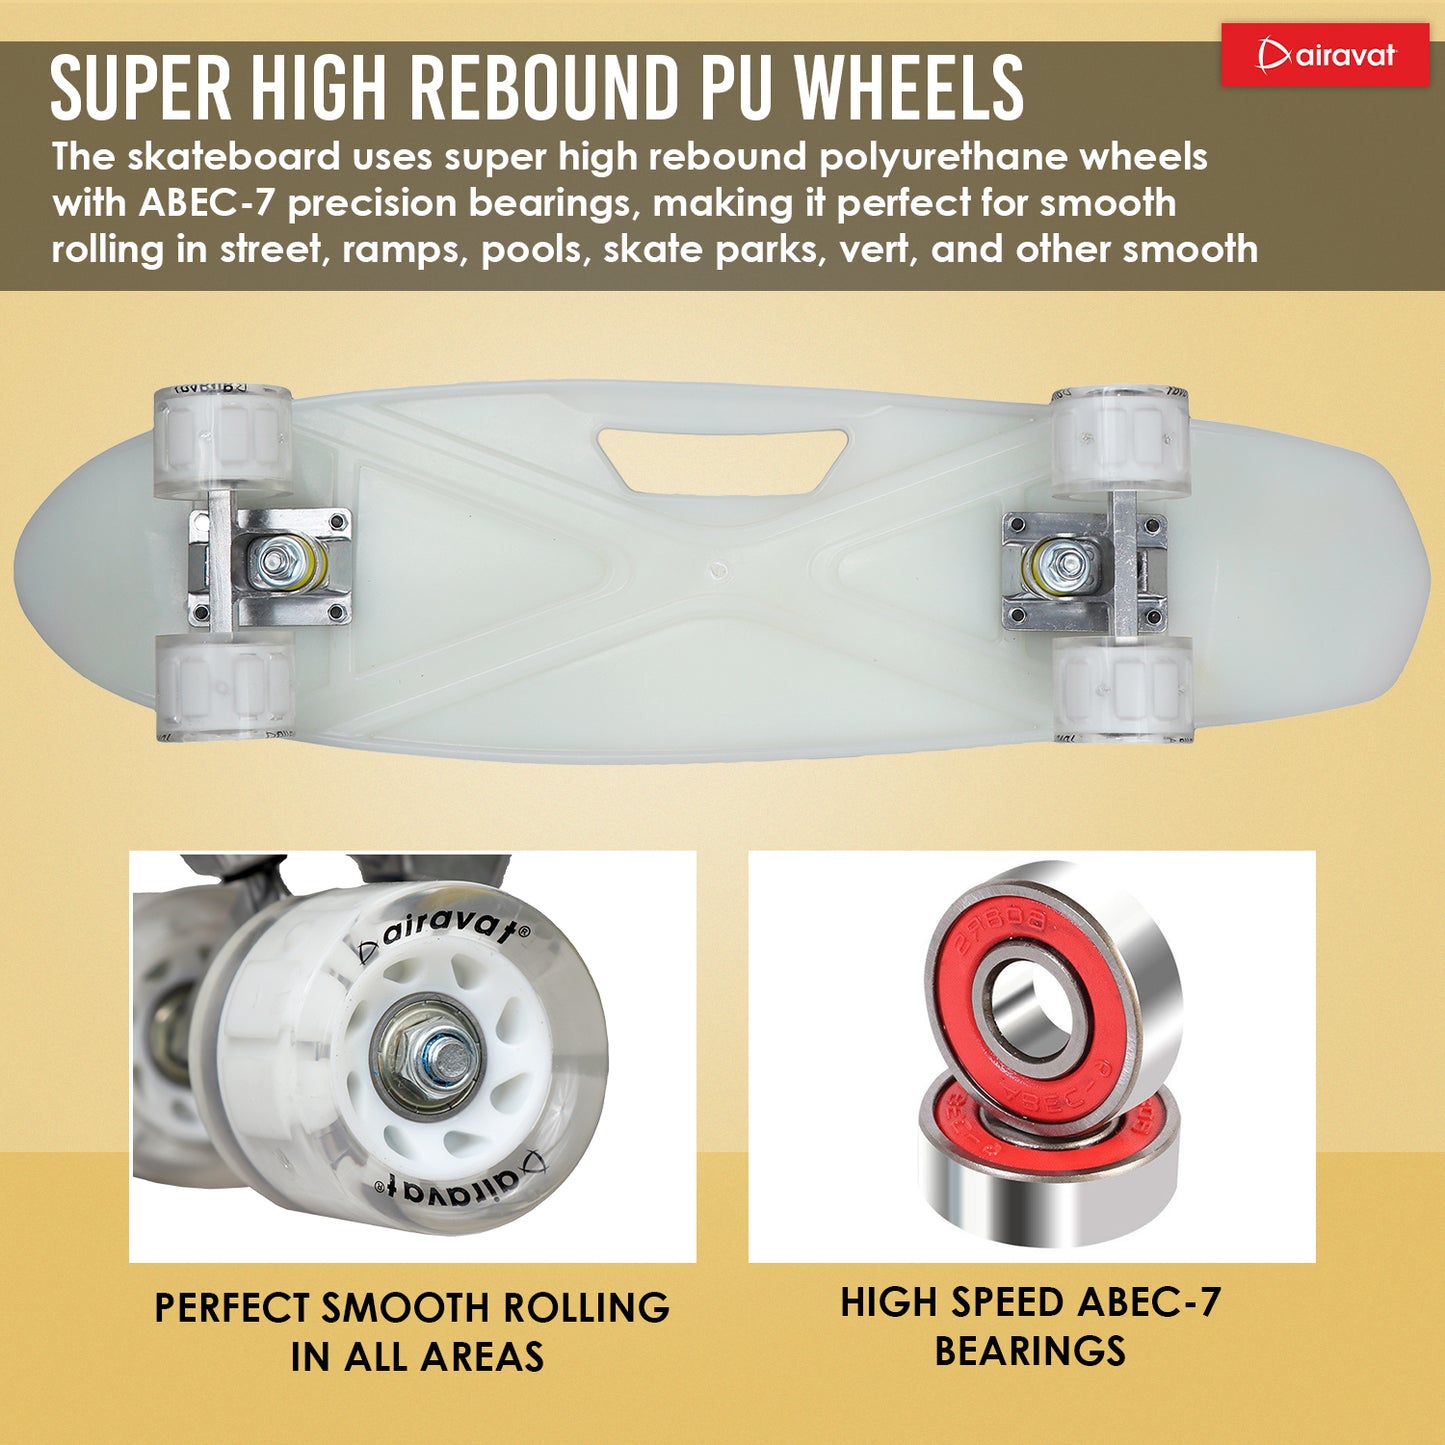 7818-skateboard-style2-abec-7wheel